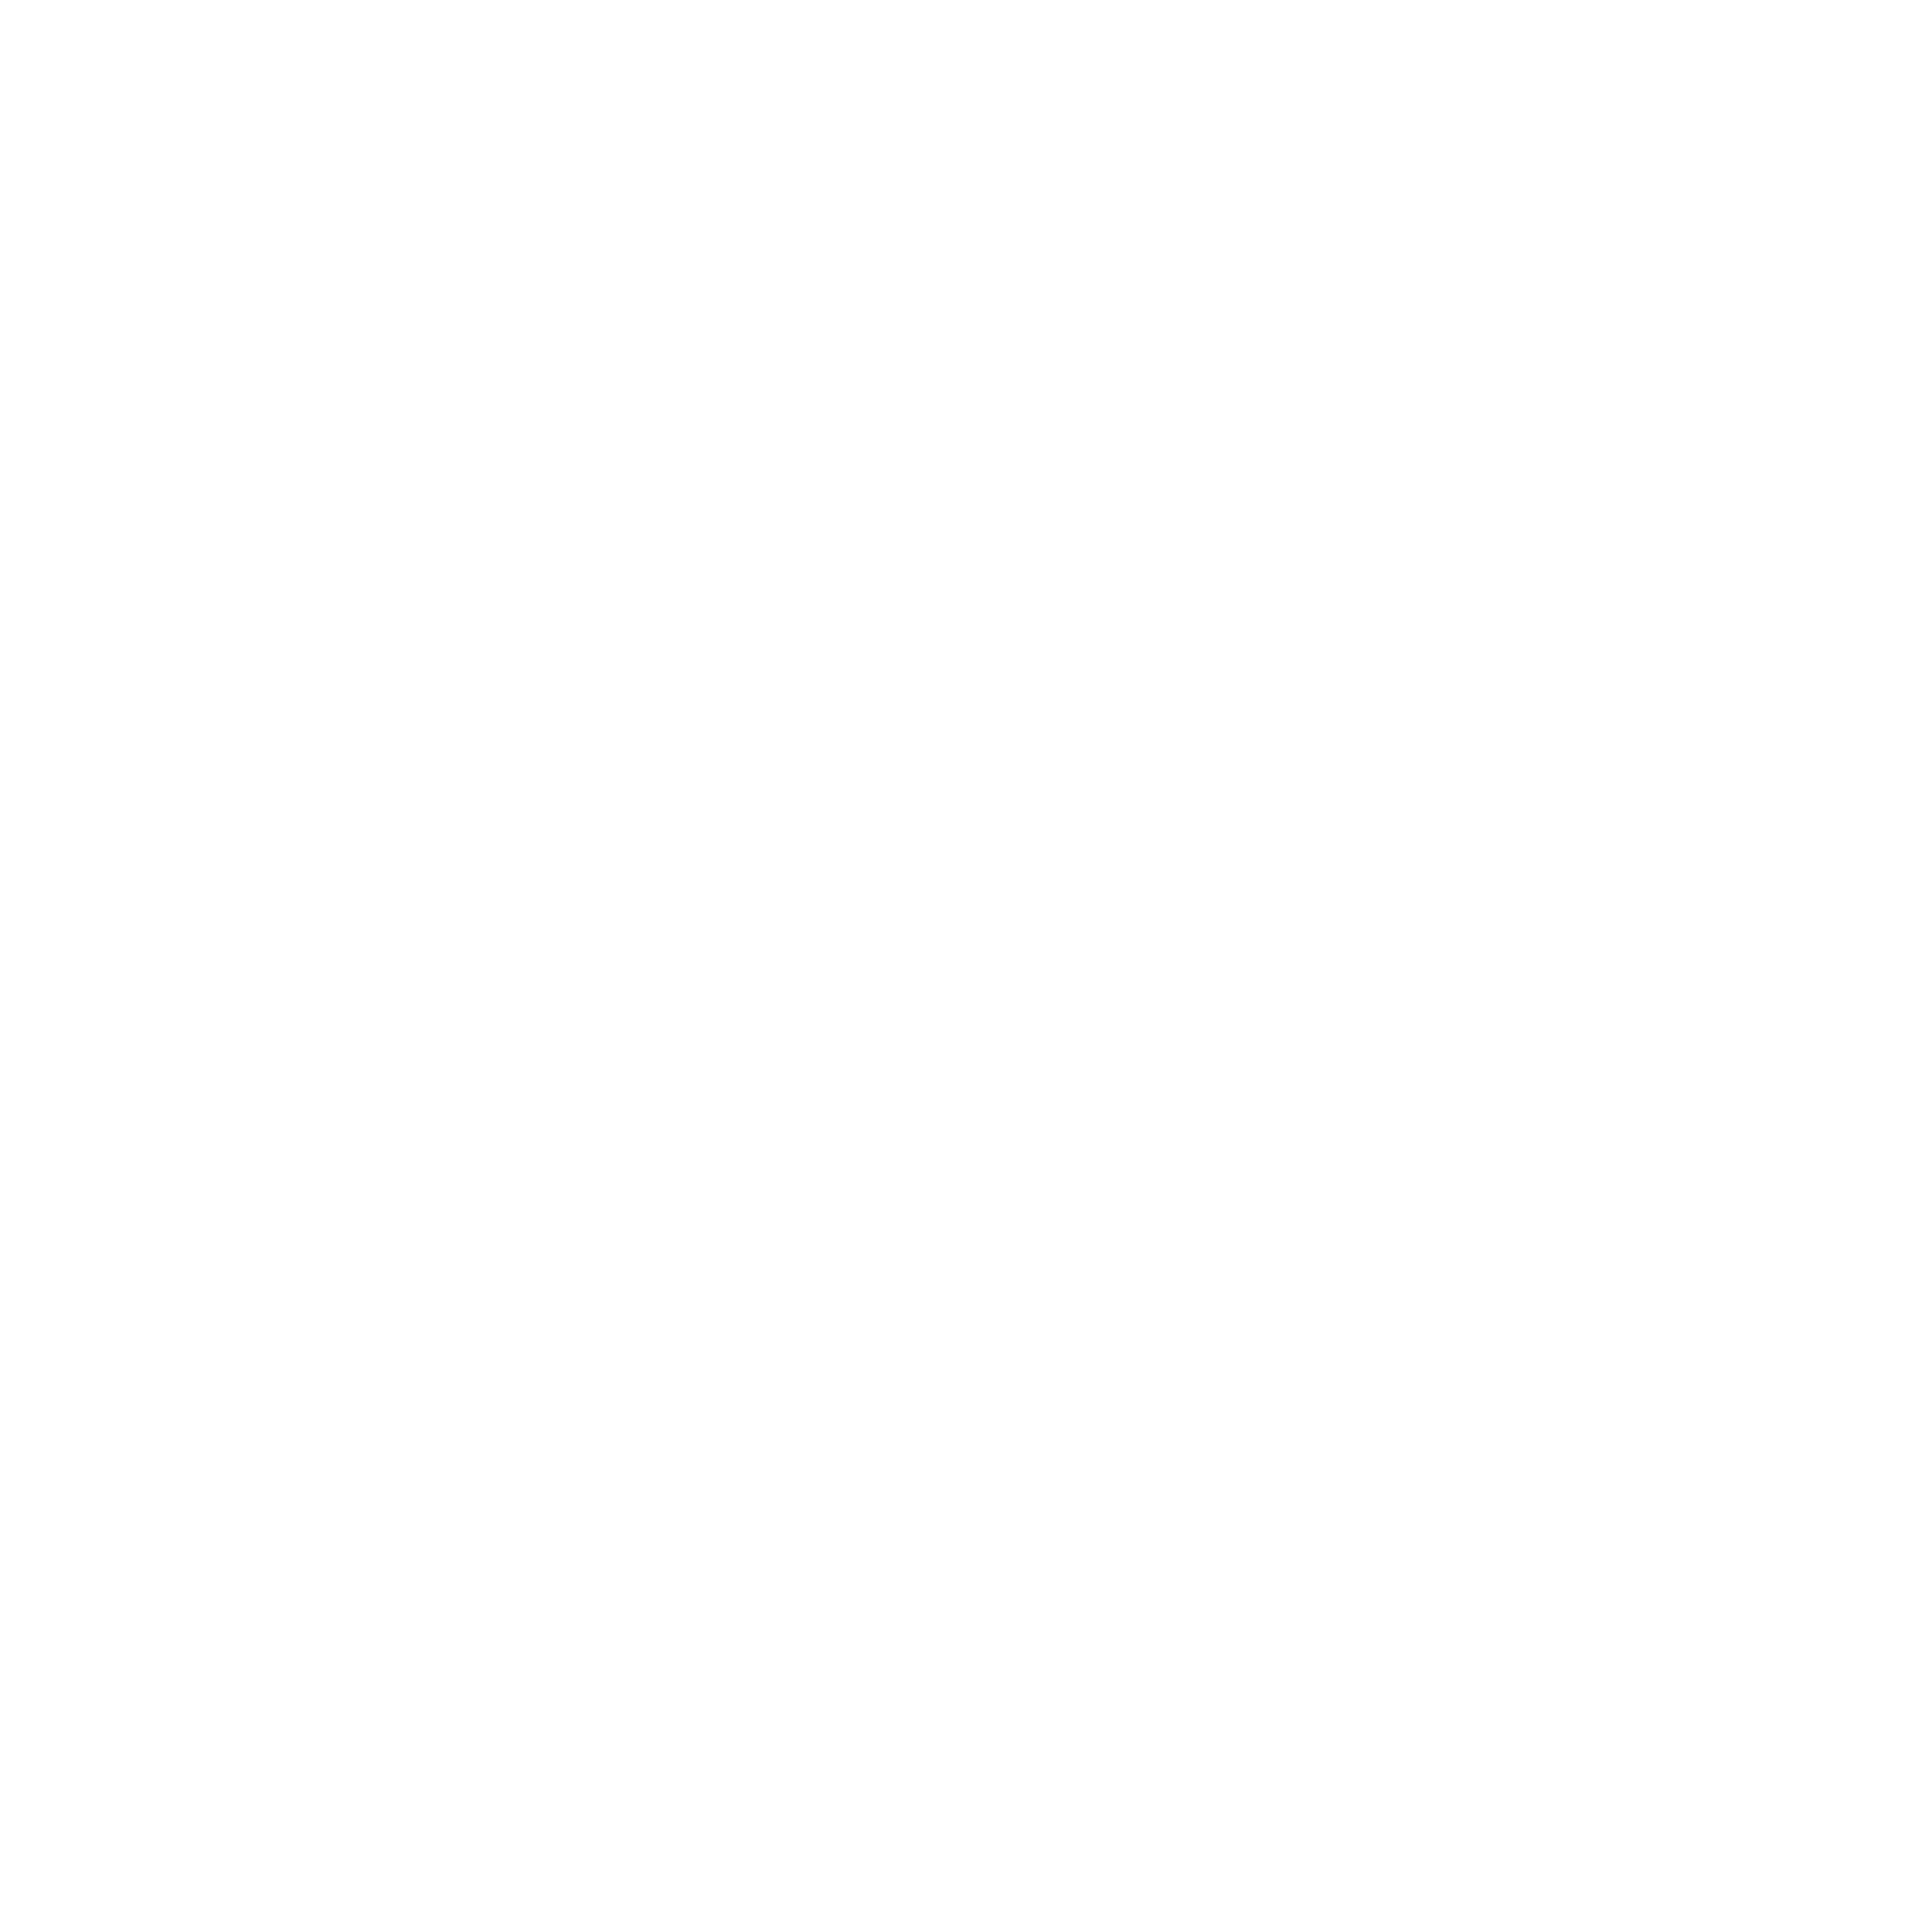 Labuan Bajo Production